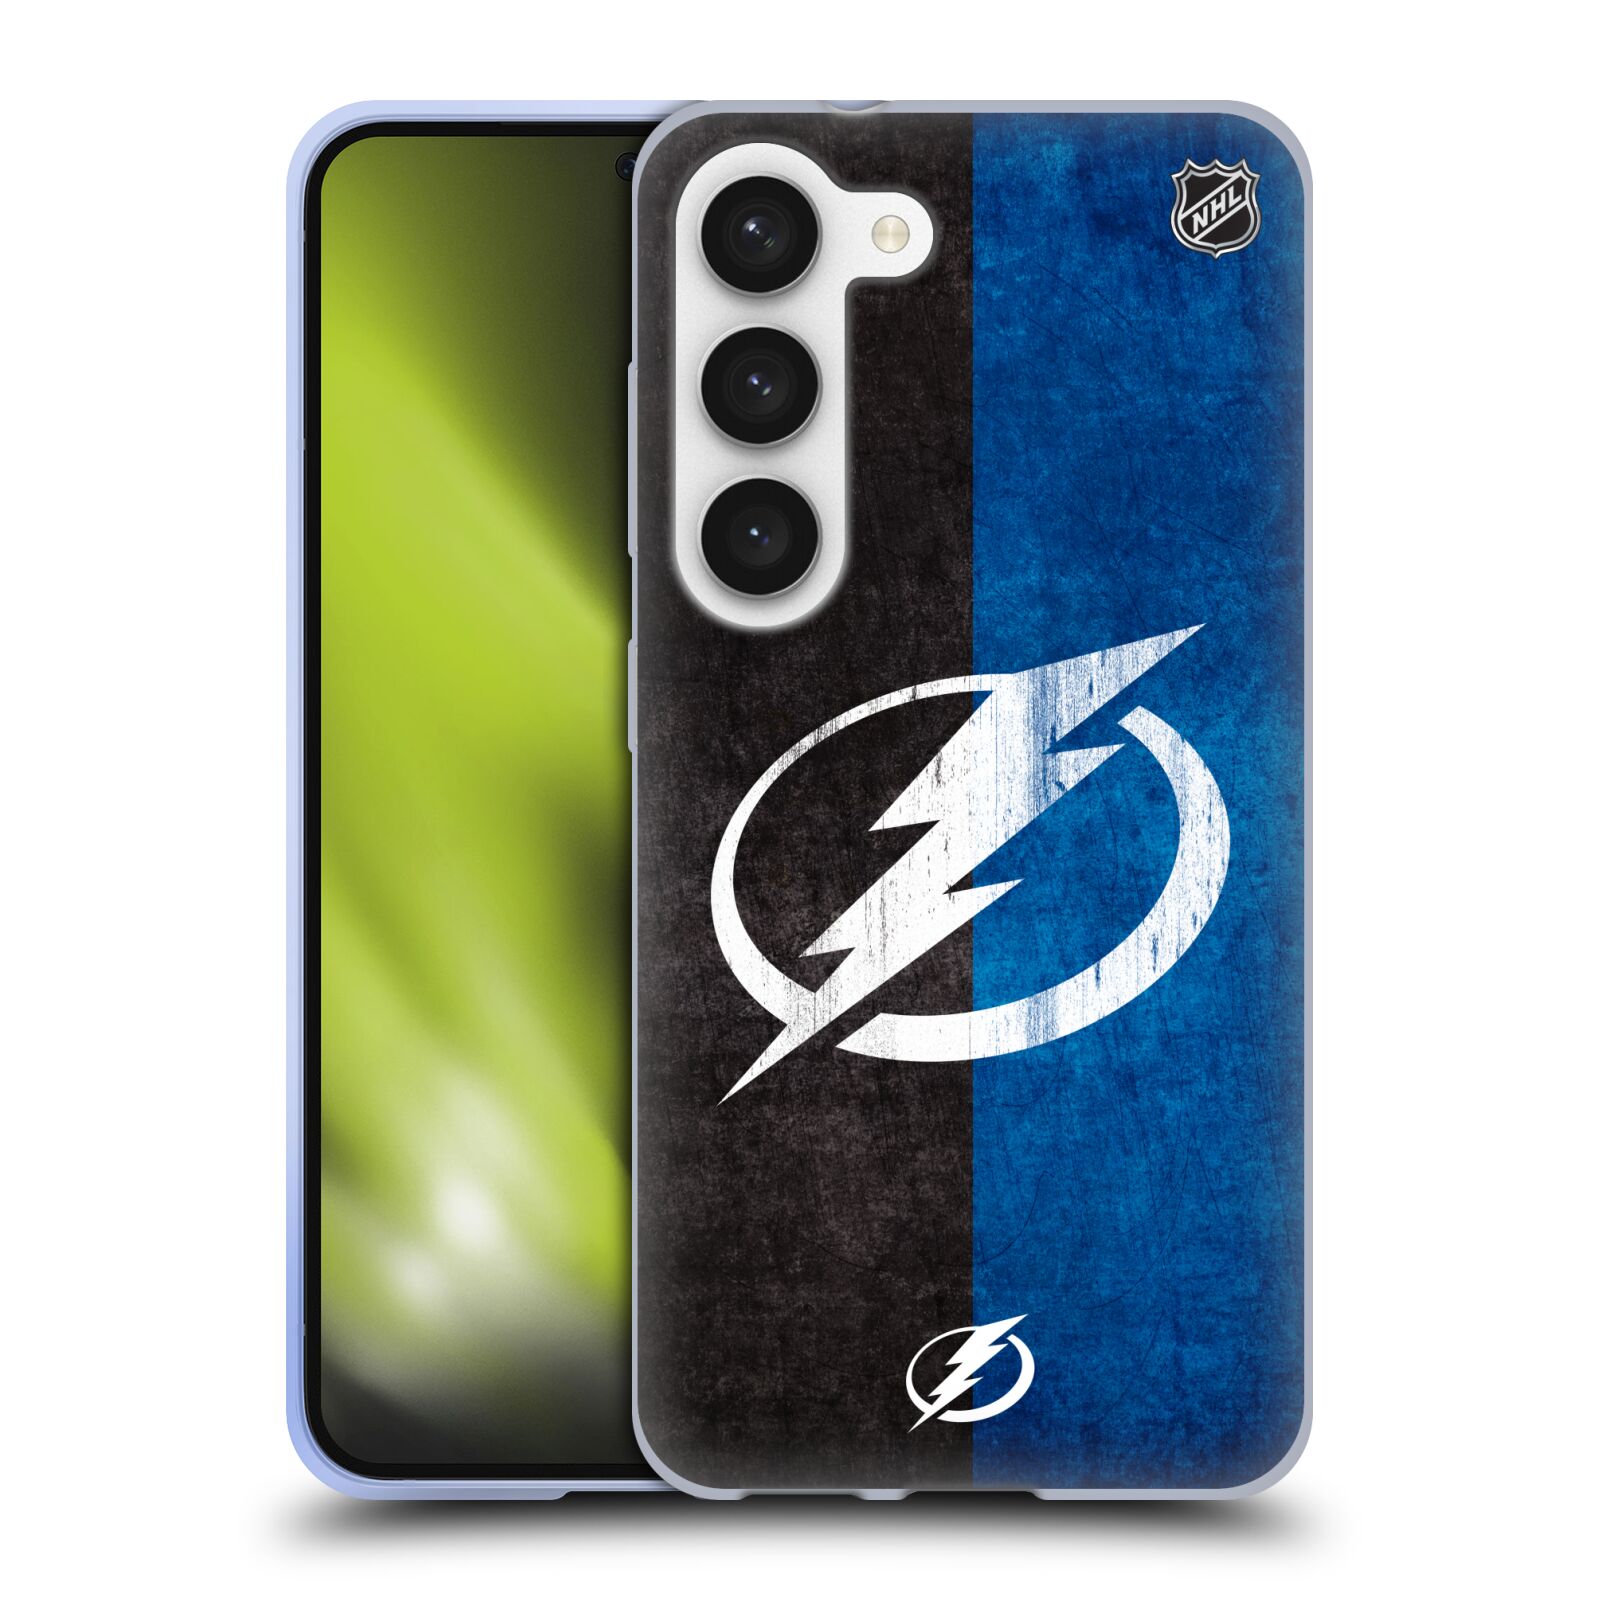 Silikonové pouzdro na mobil Samsung Galaxy S23 - NHL - Půlené logo Tampa Bay Lightning (Silikonový kryt, obal, pouzdro na mobilní telefon Samsung Galaxy S23 s licencovaným motivem NHL - Půlené logo Tampa Bay Lightning)